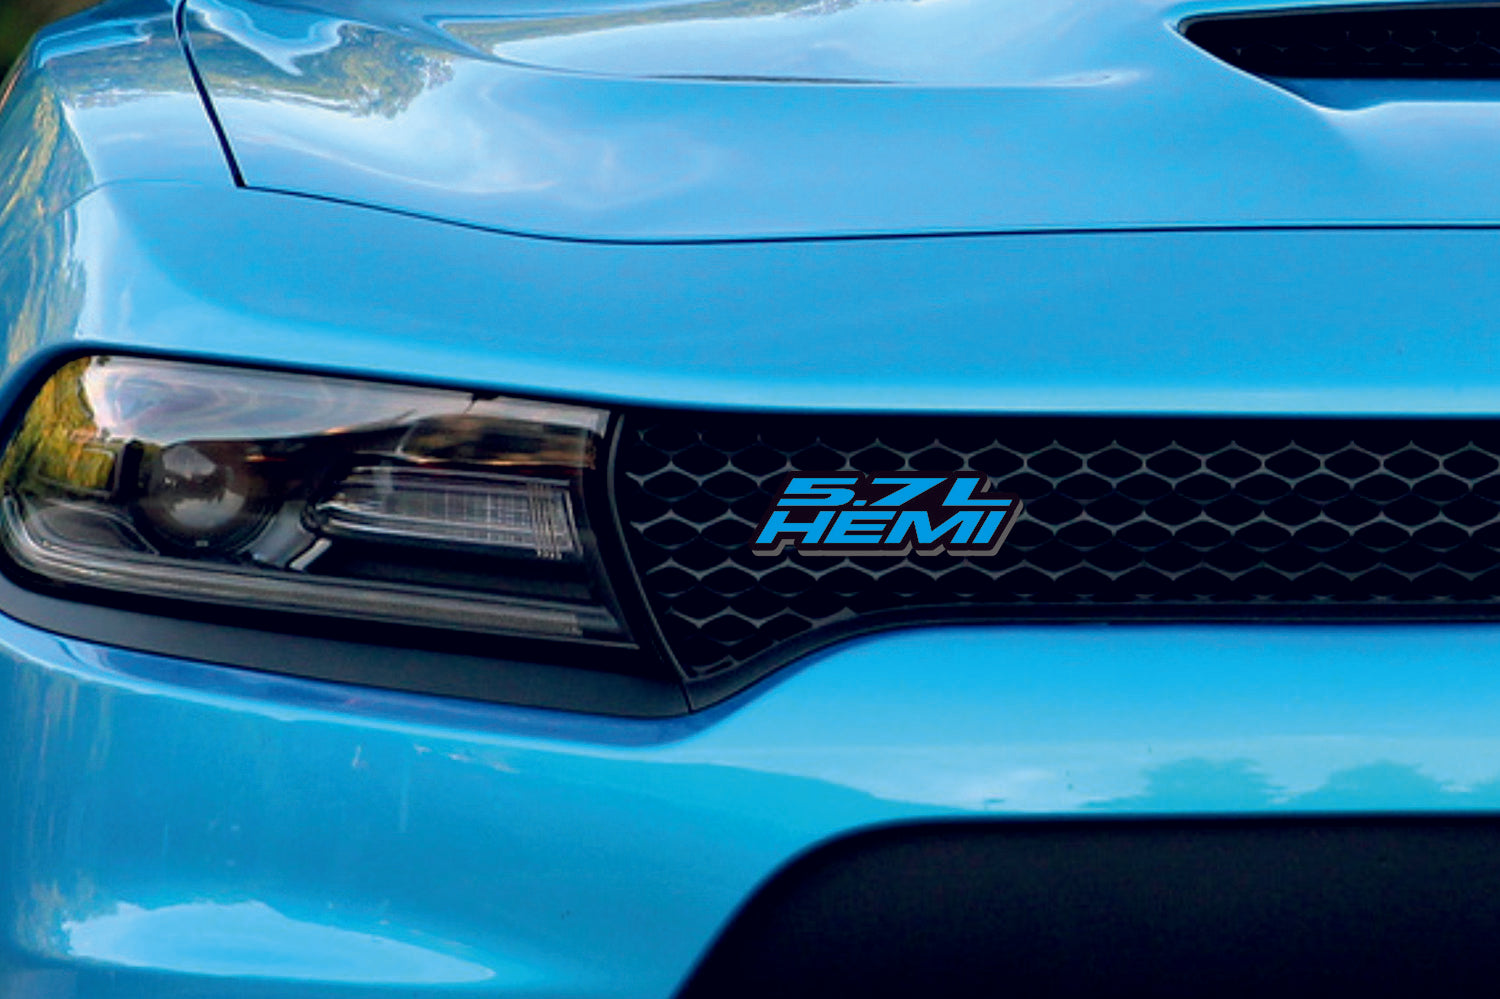 DODGE Radiator grille emblem with 5.7L Hemi logo - decoinfabric